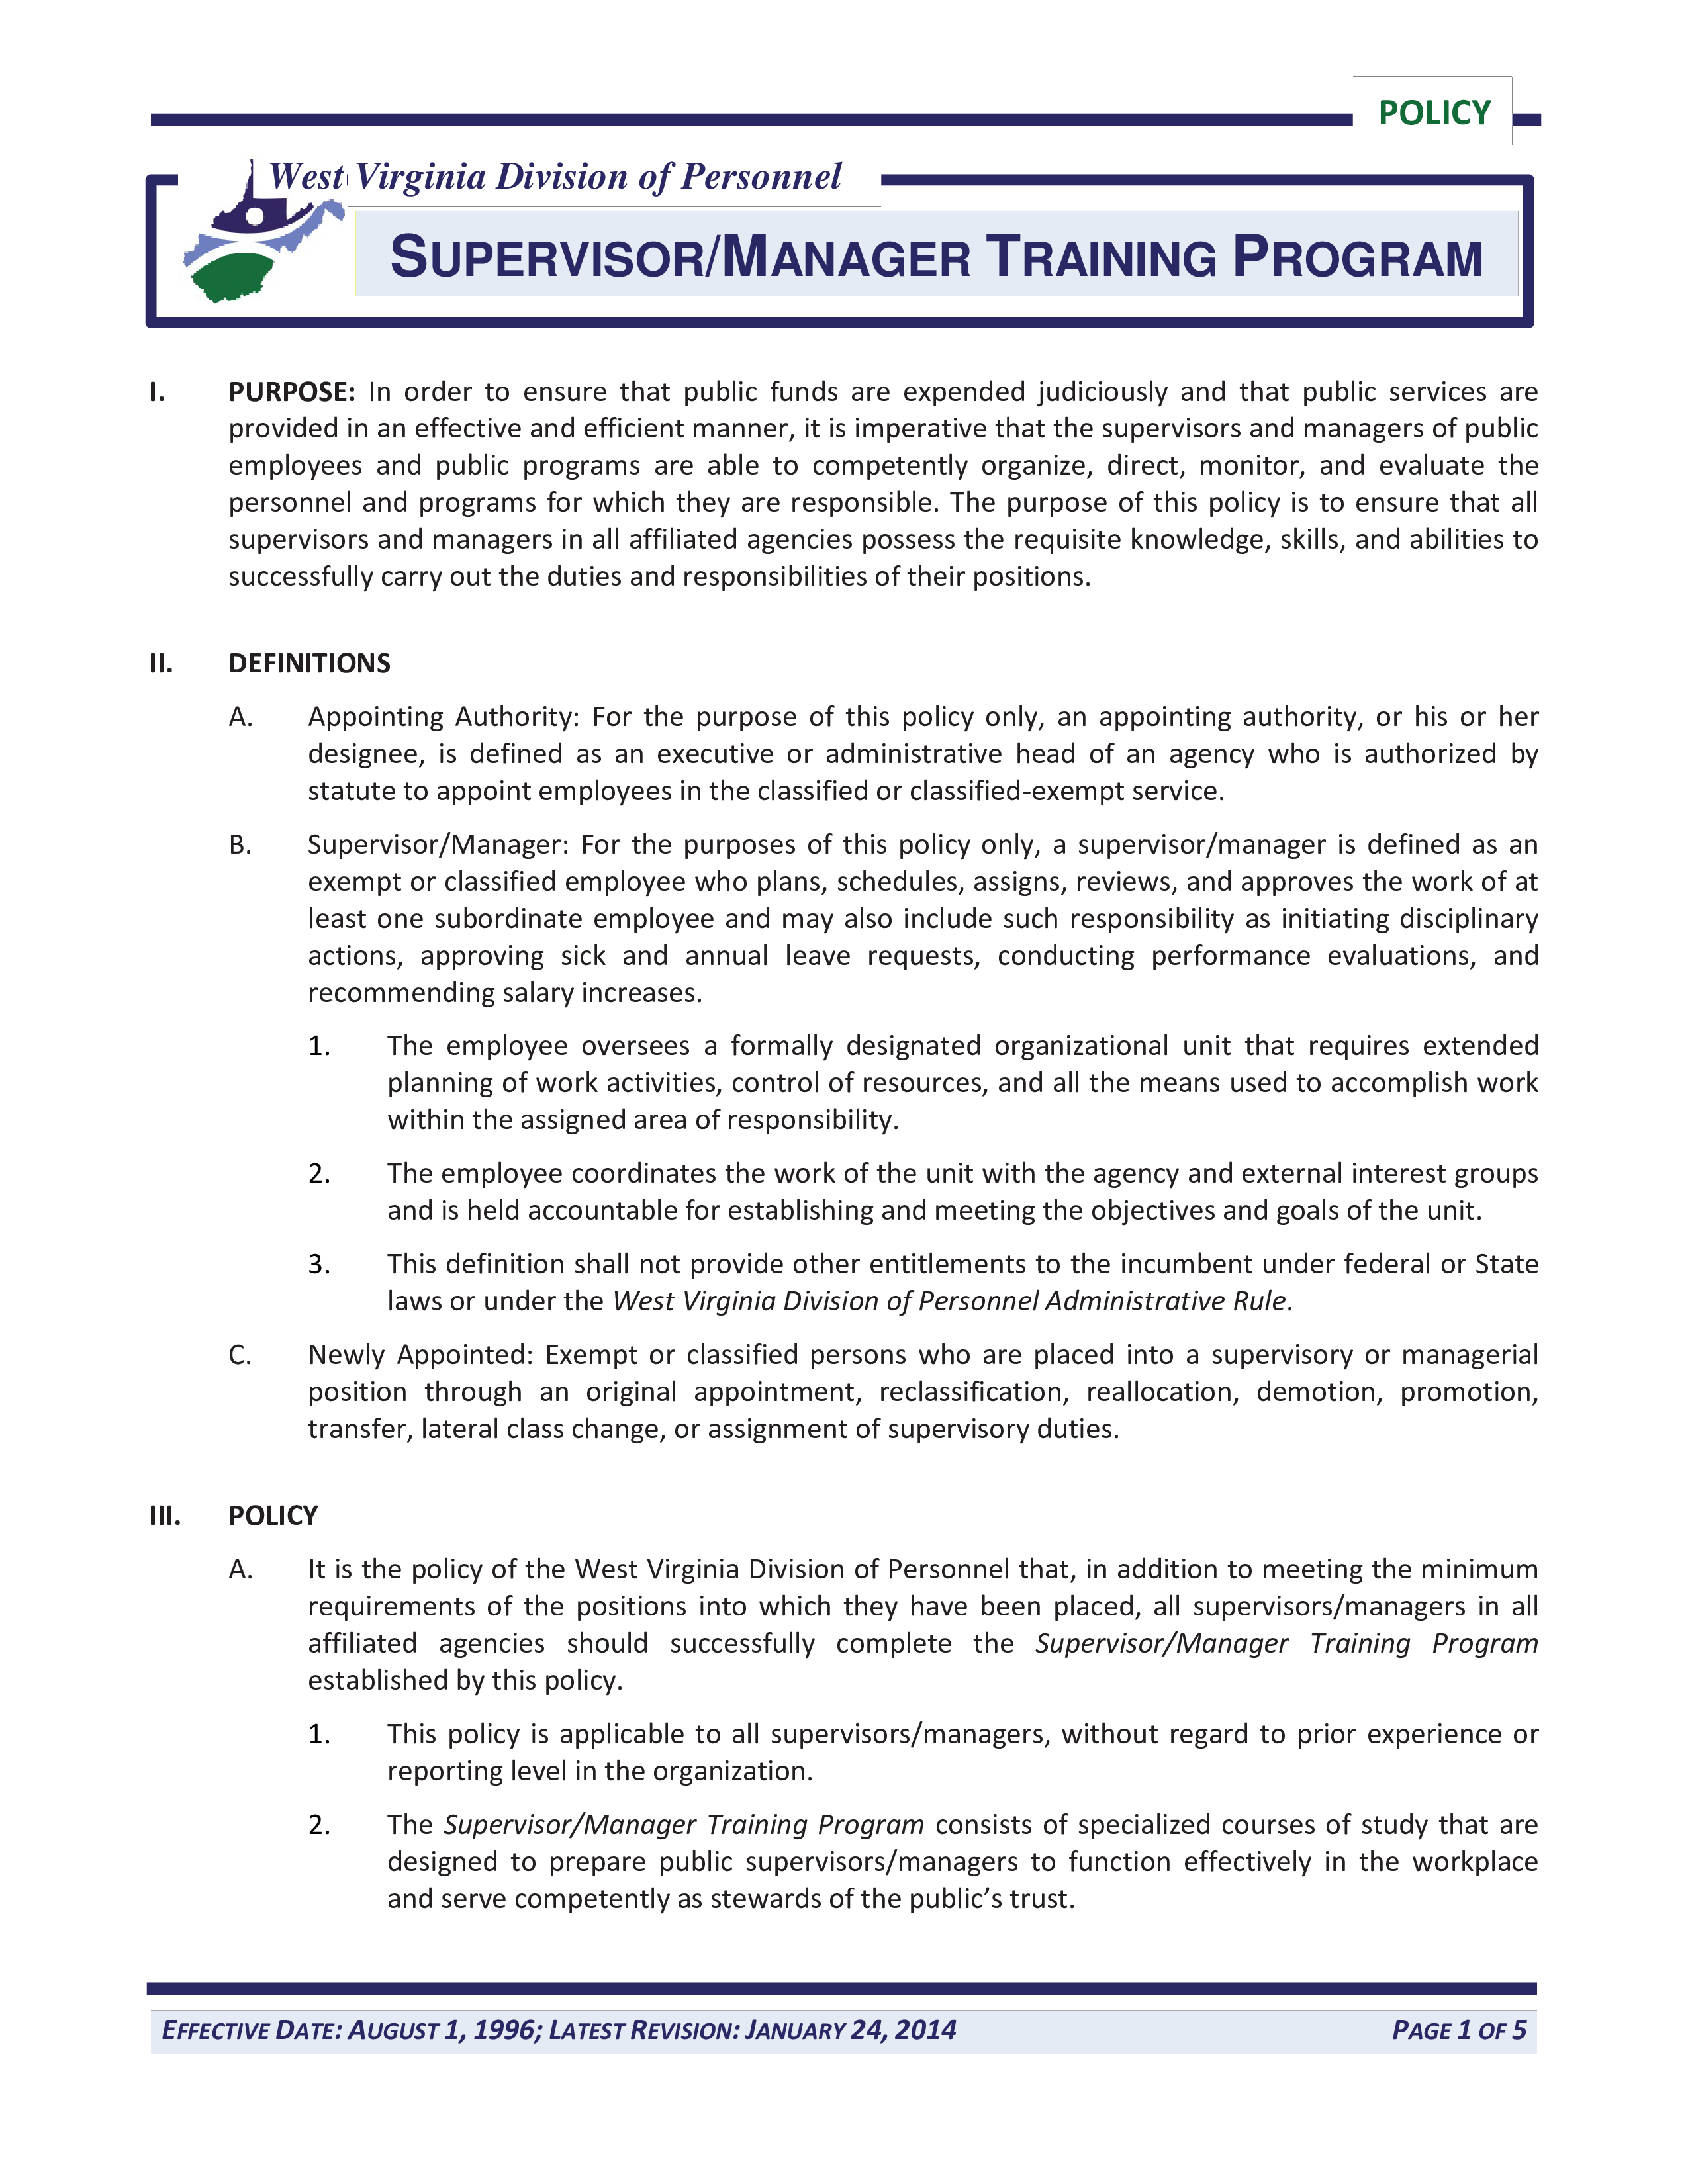 Supervisor or Manager Training Policy Program main image